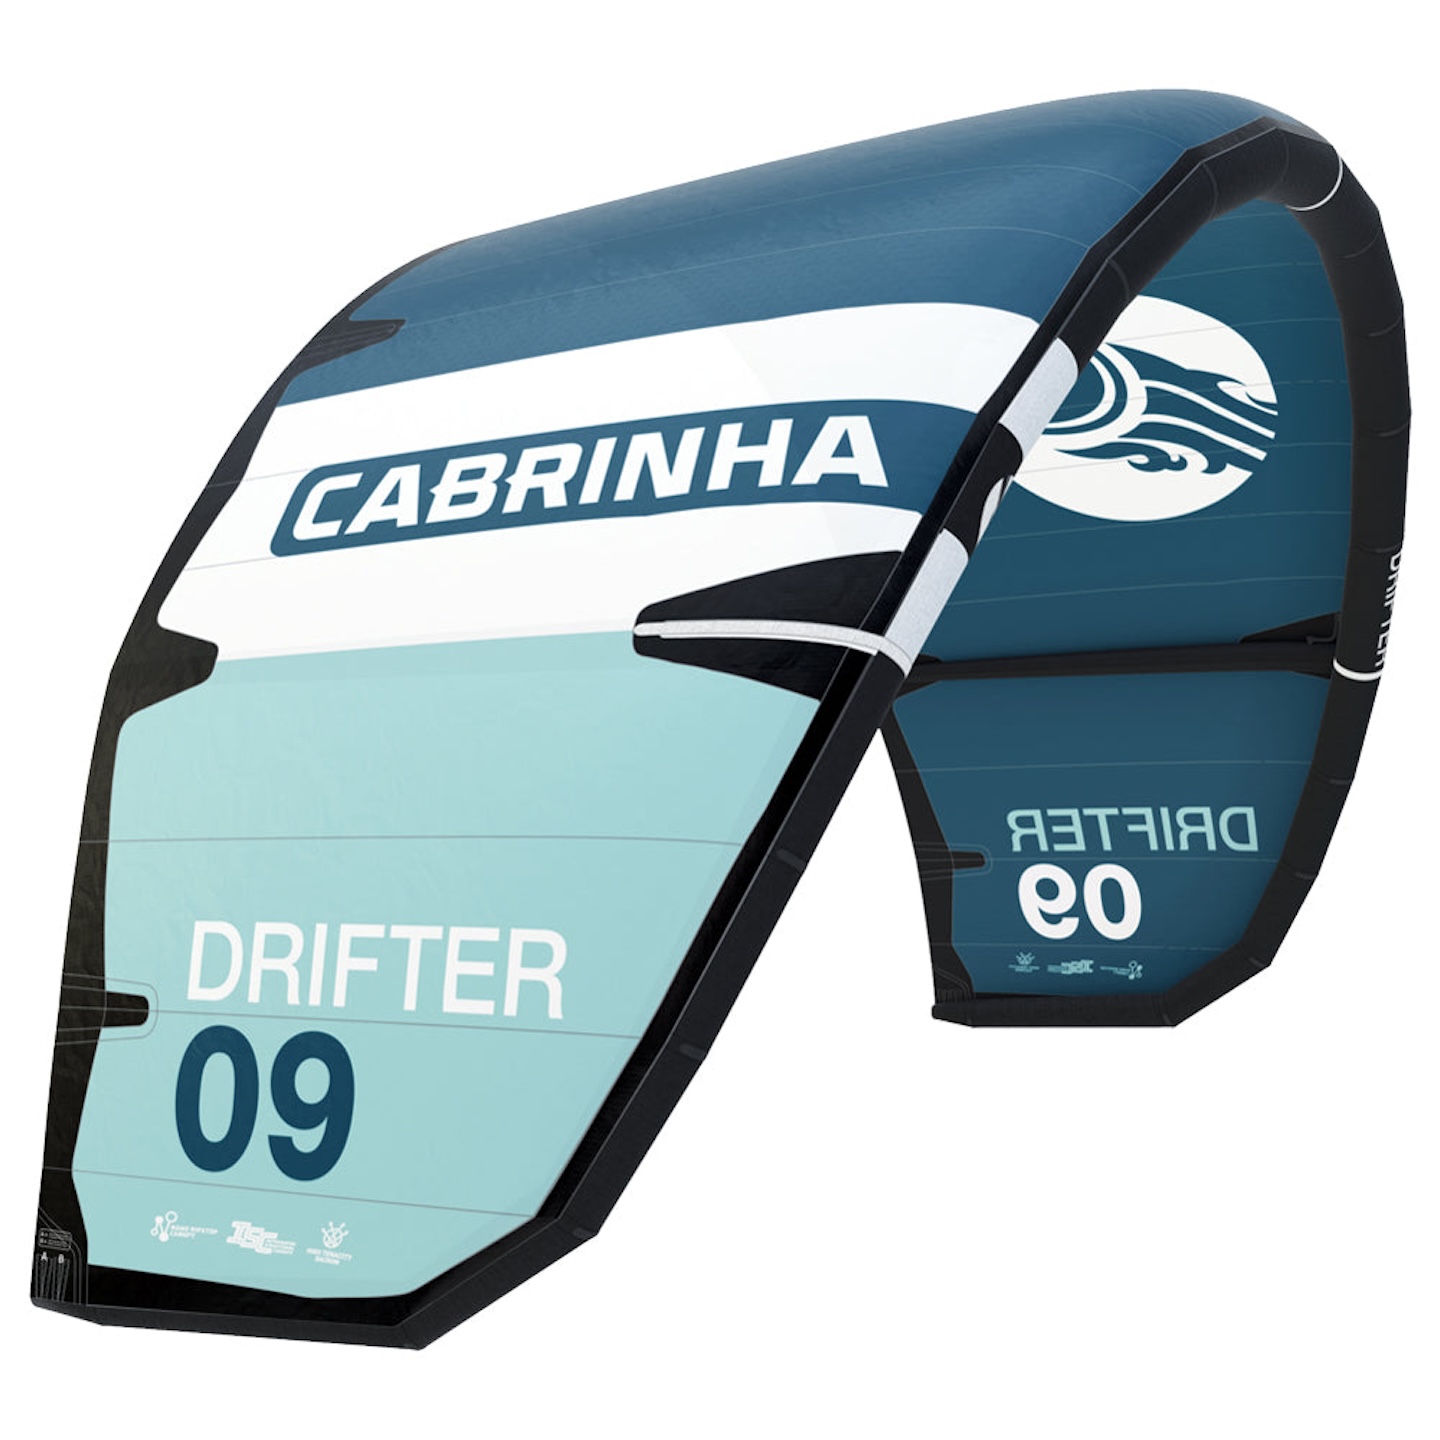 Cabrinha 04S Drifter Kite C3